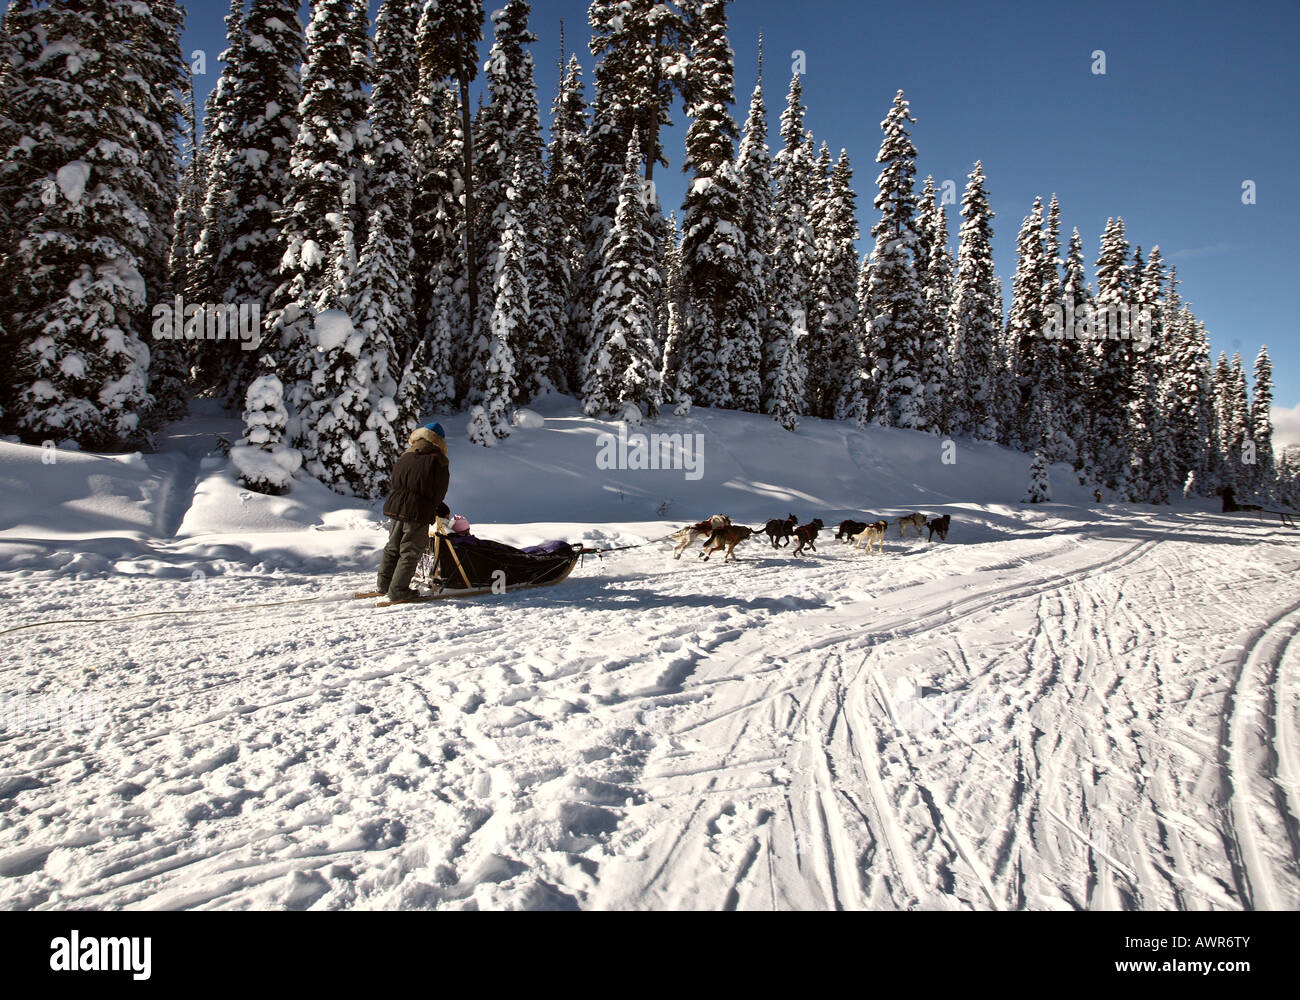 Dog sled racing in Alberta Stock Photo